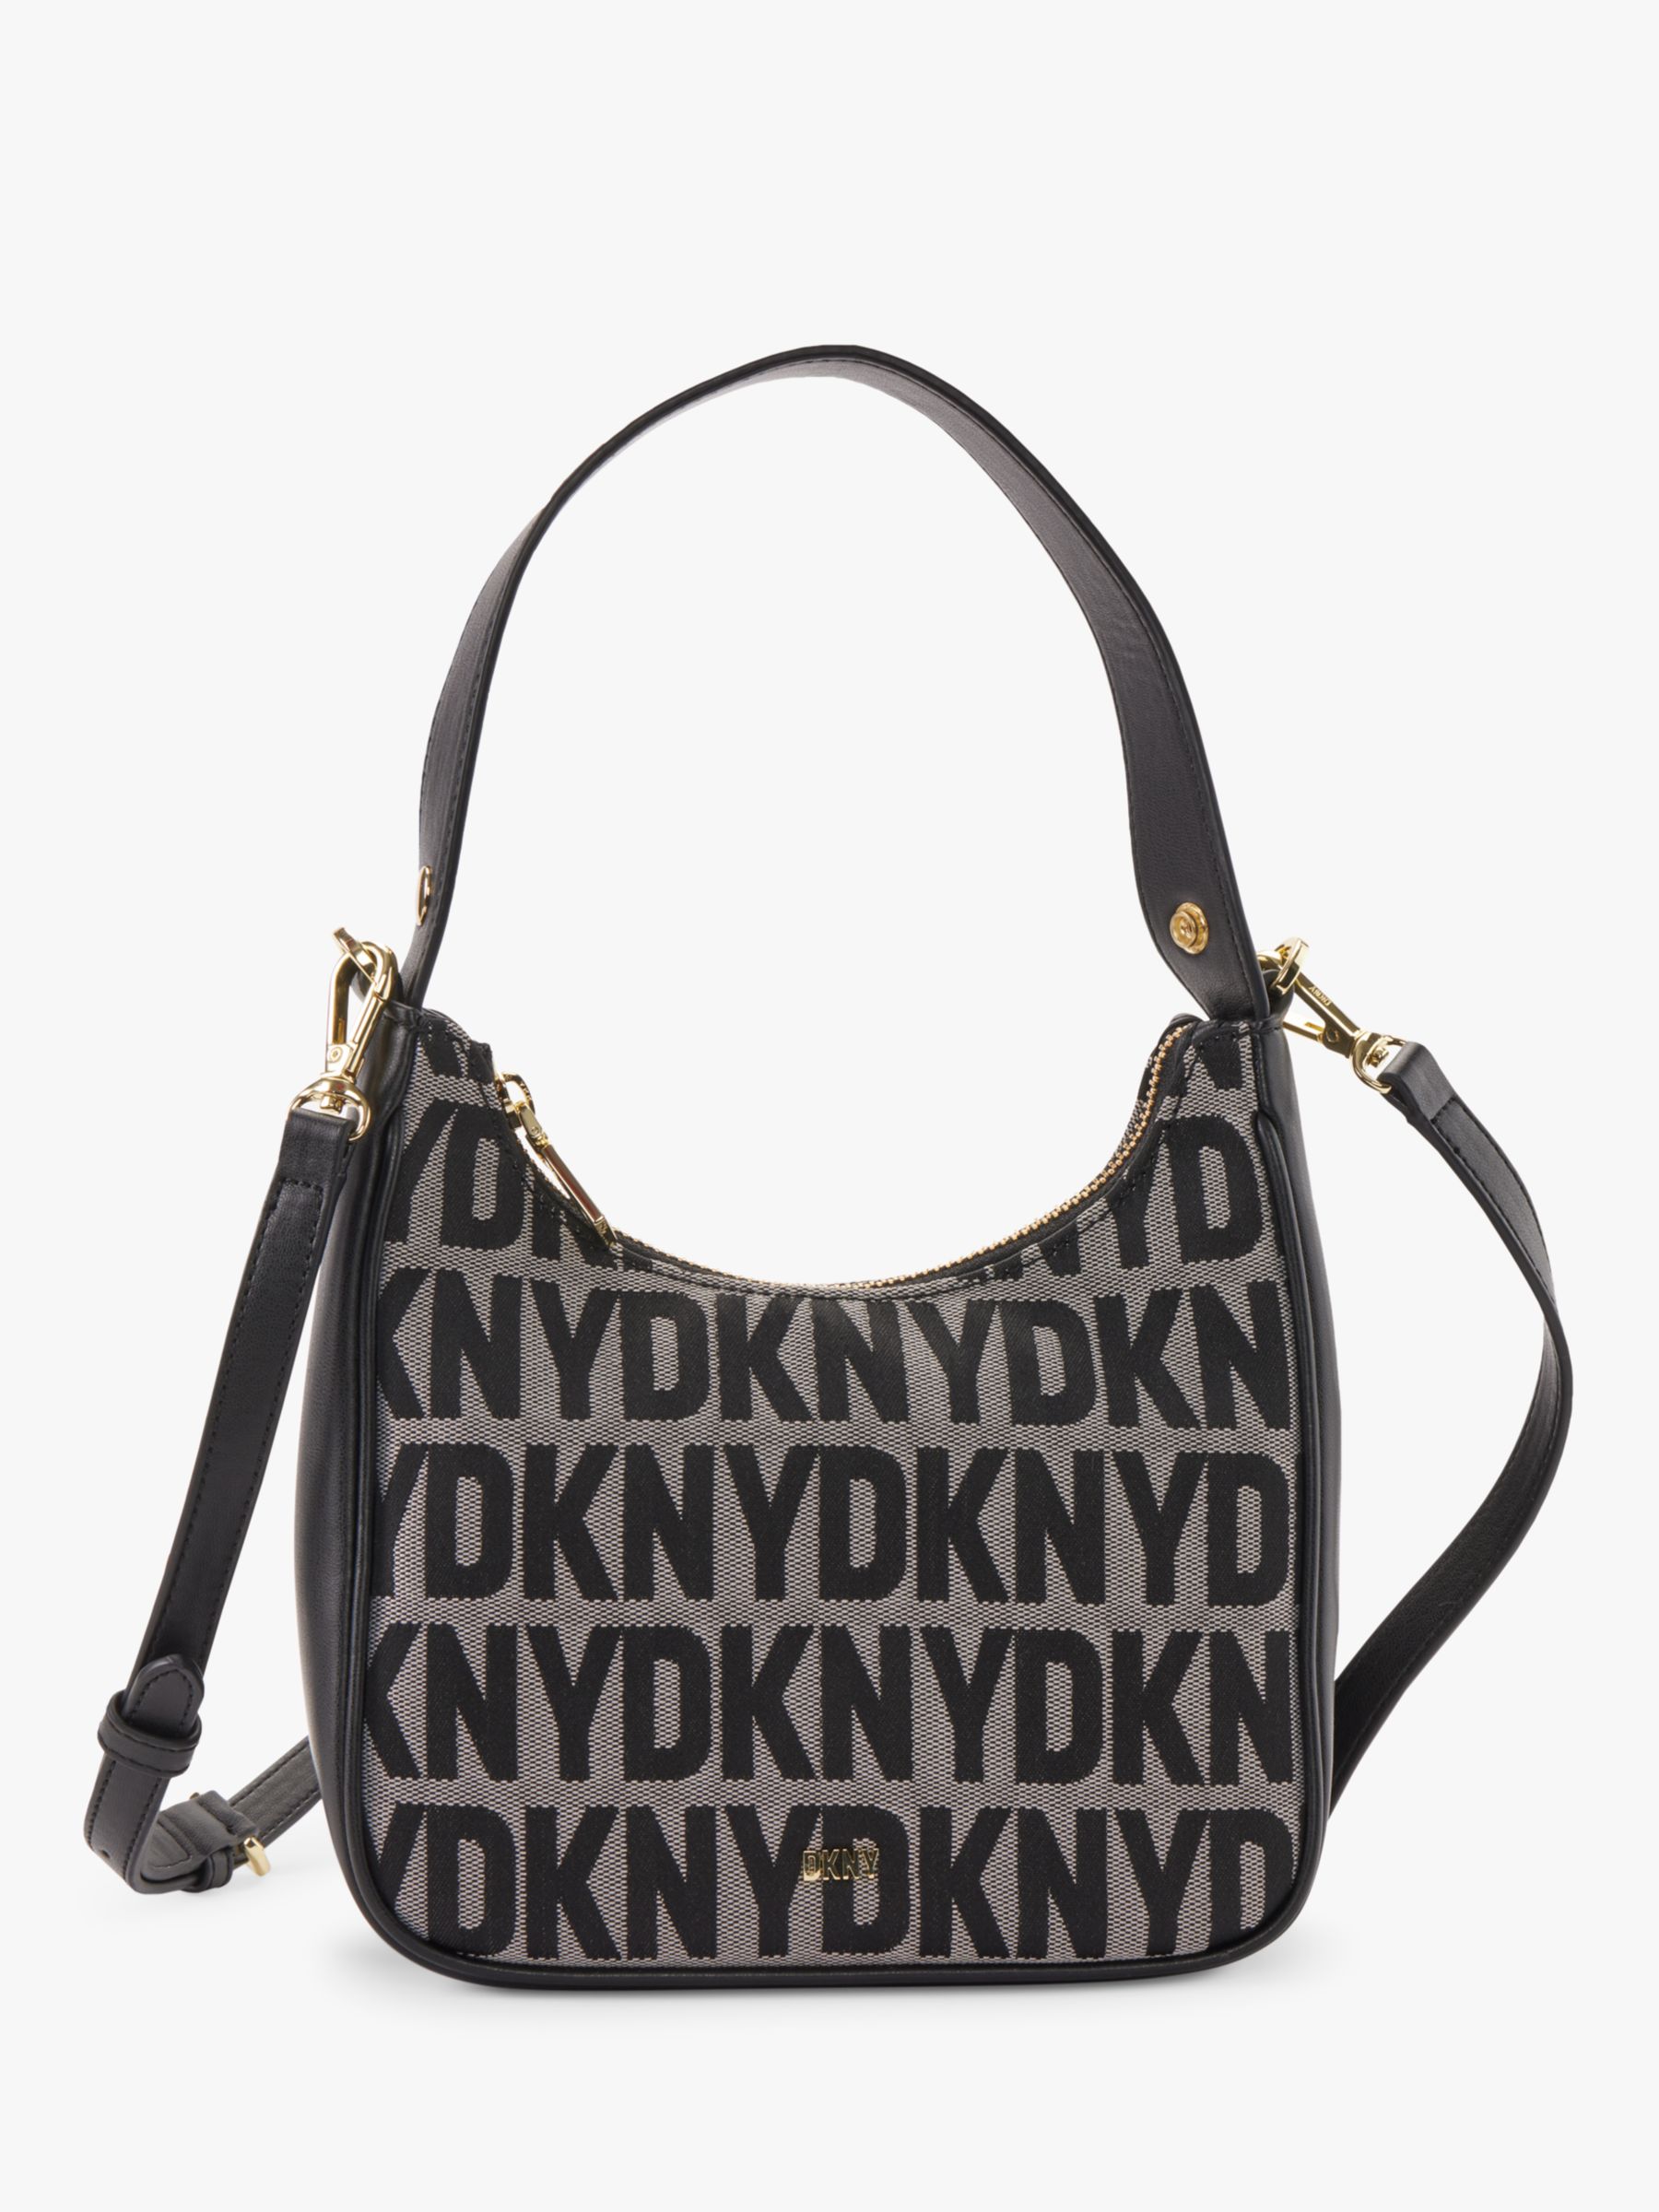 DKNY CAROL BAG - Handbag - chino/black/beige - Zalando.de